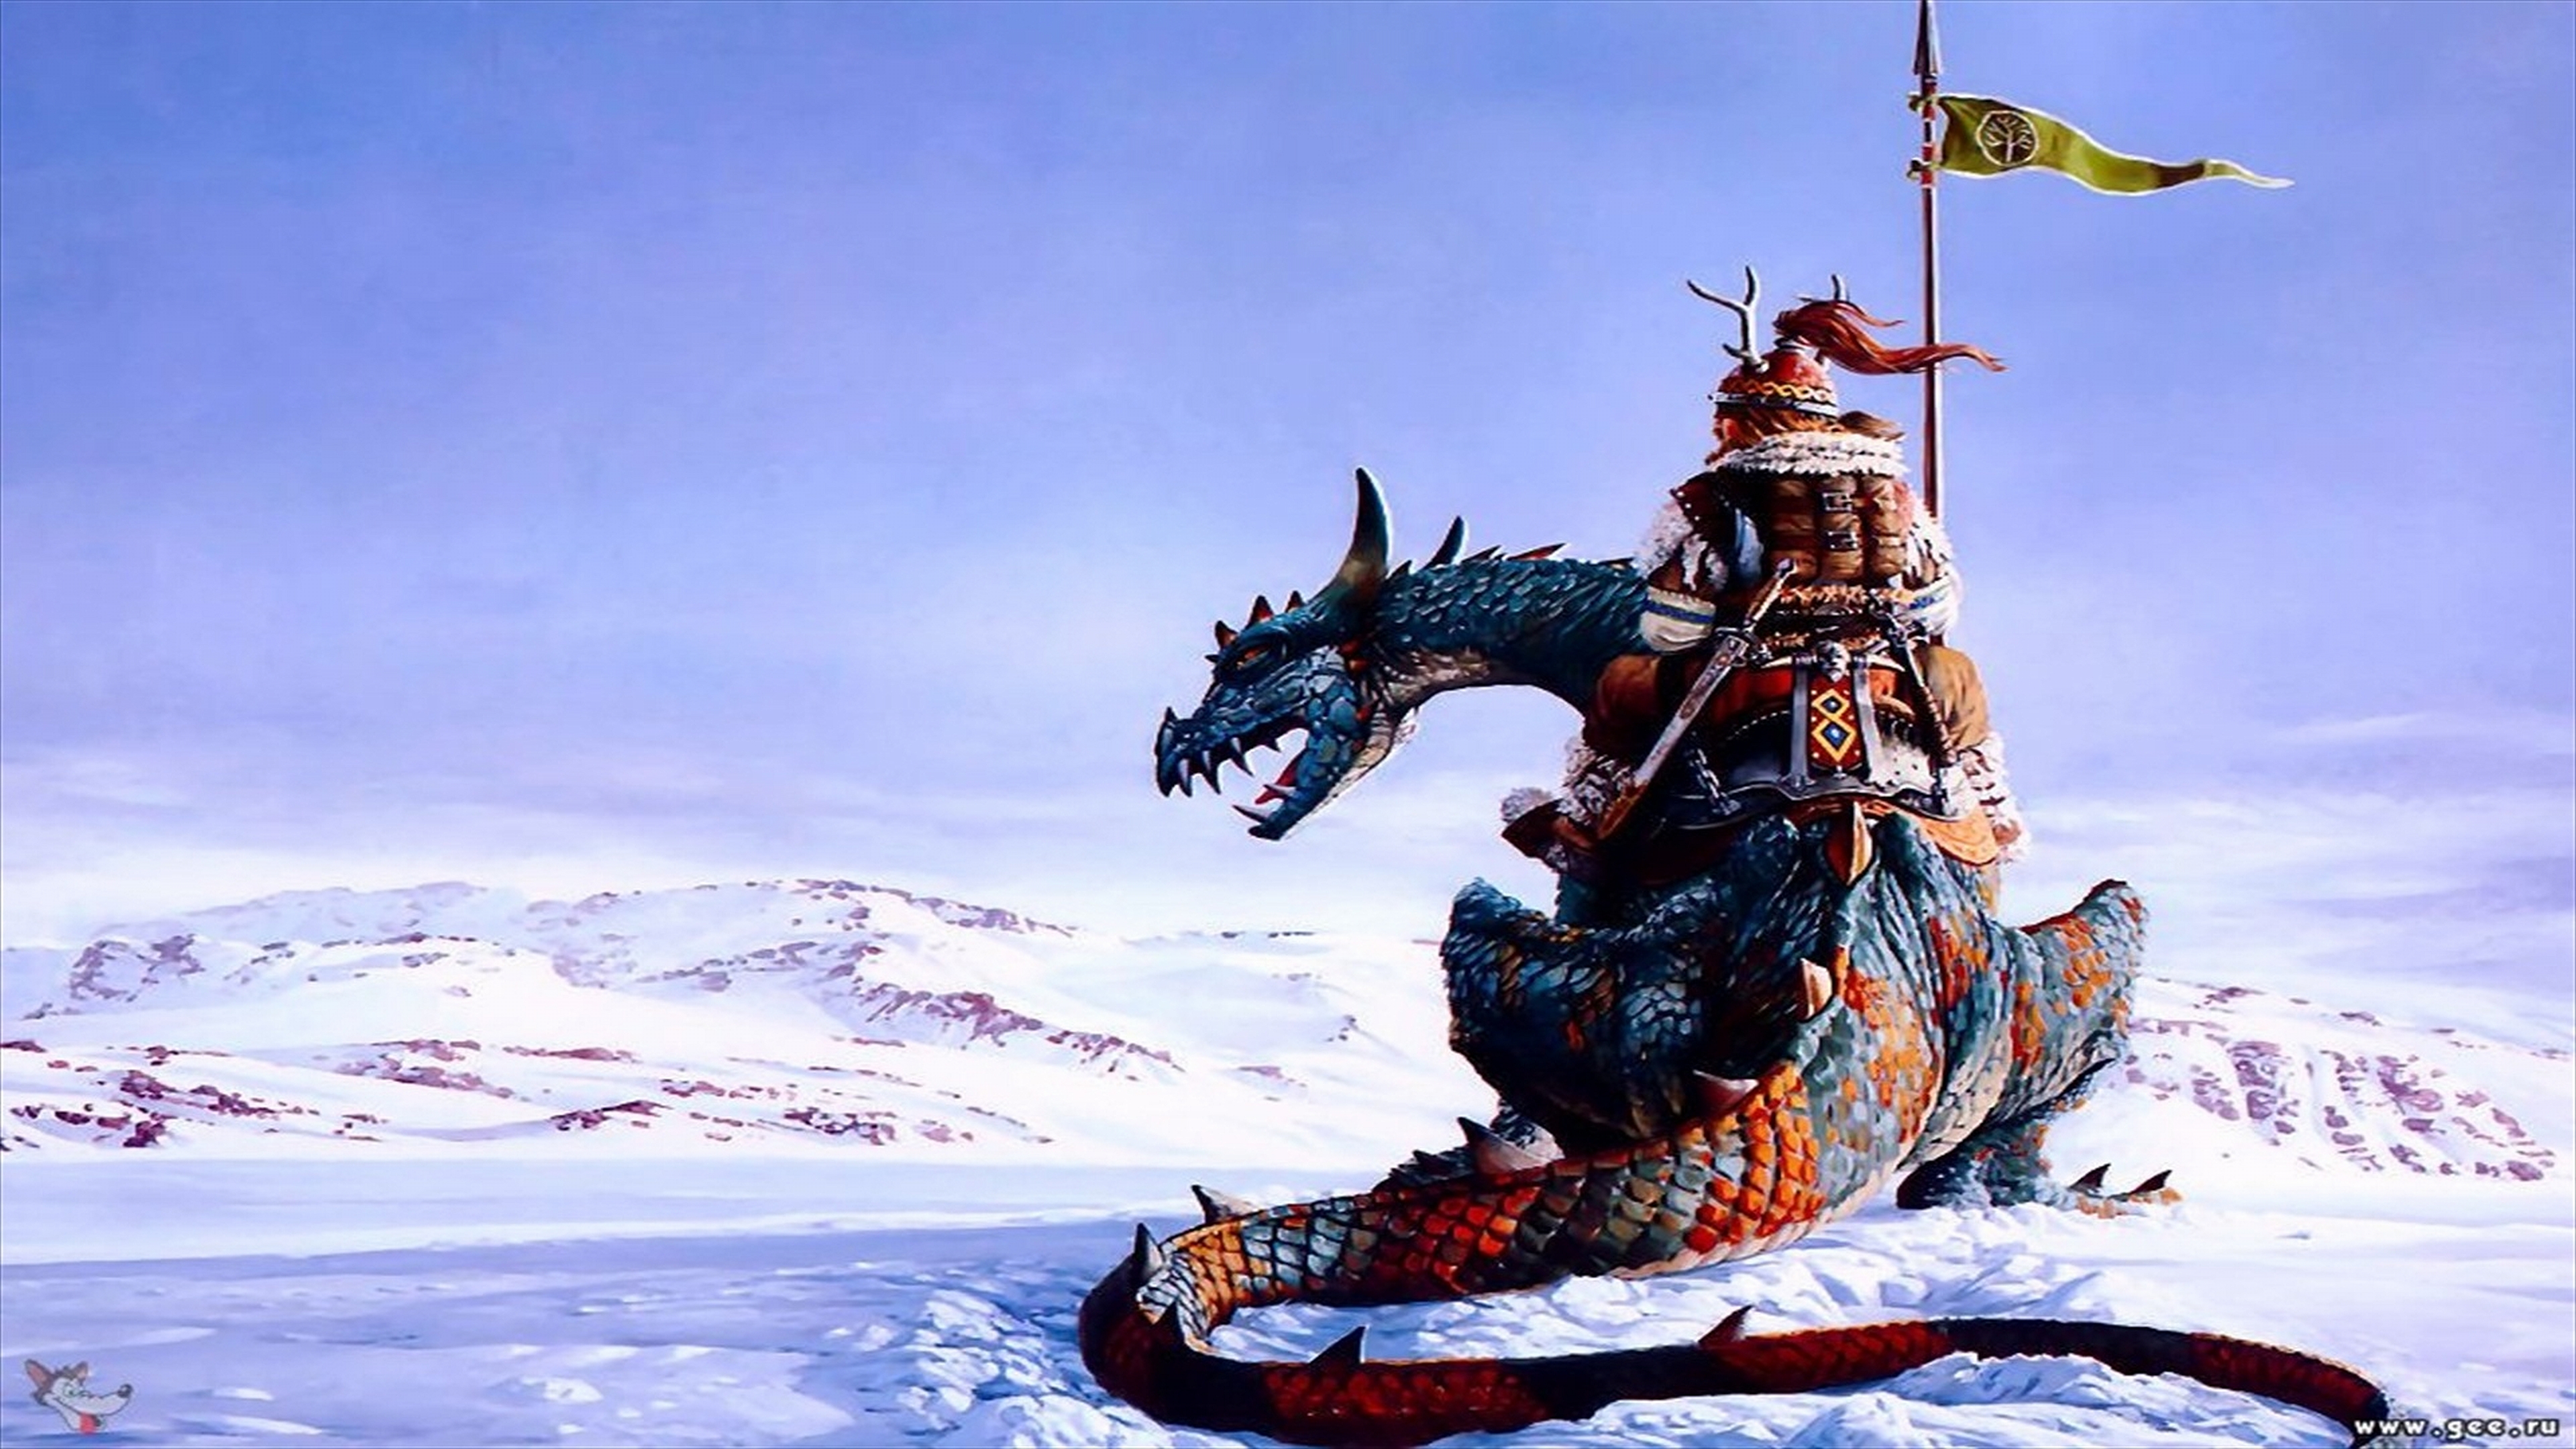 Fantasy Dragon 4k Ultra HD Wallpaper by Larry Elmore